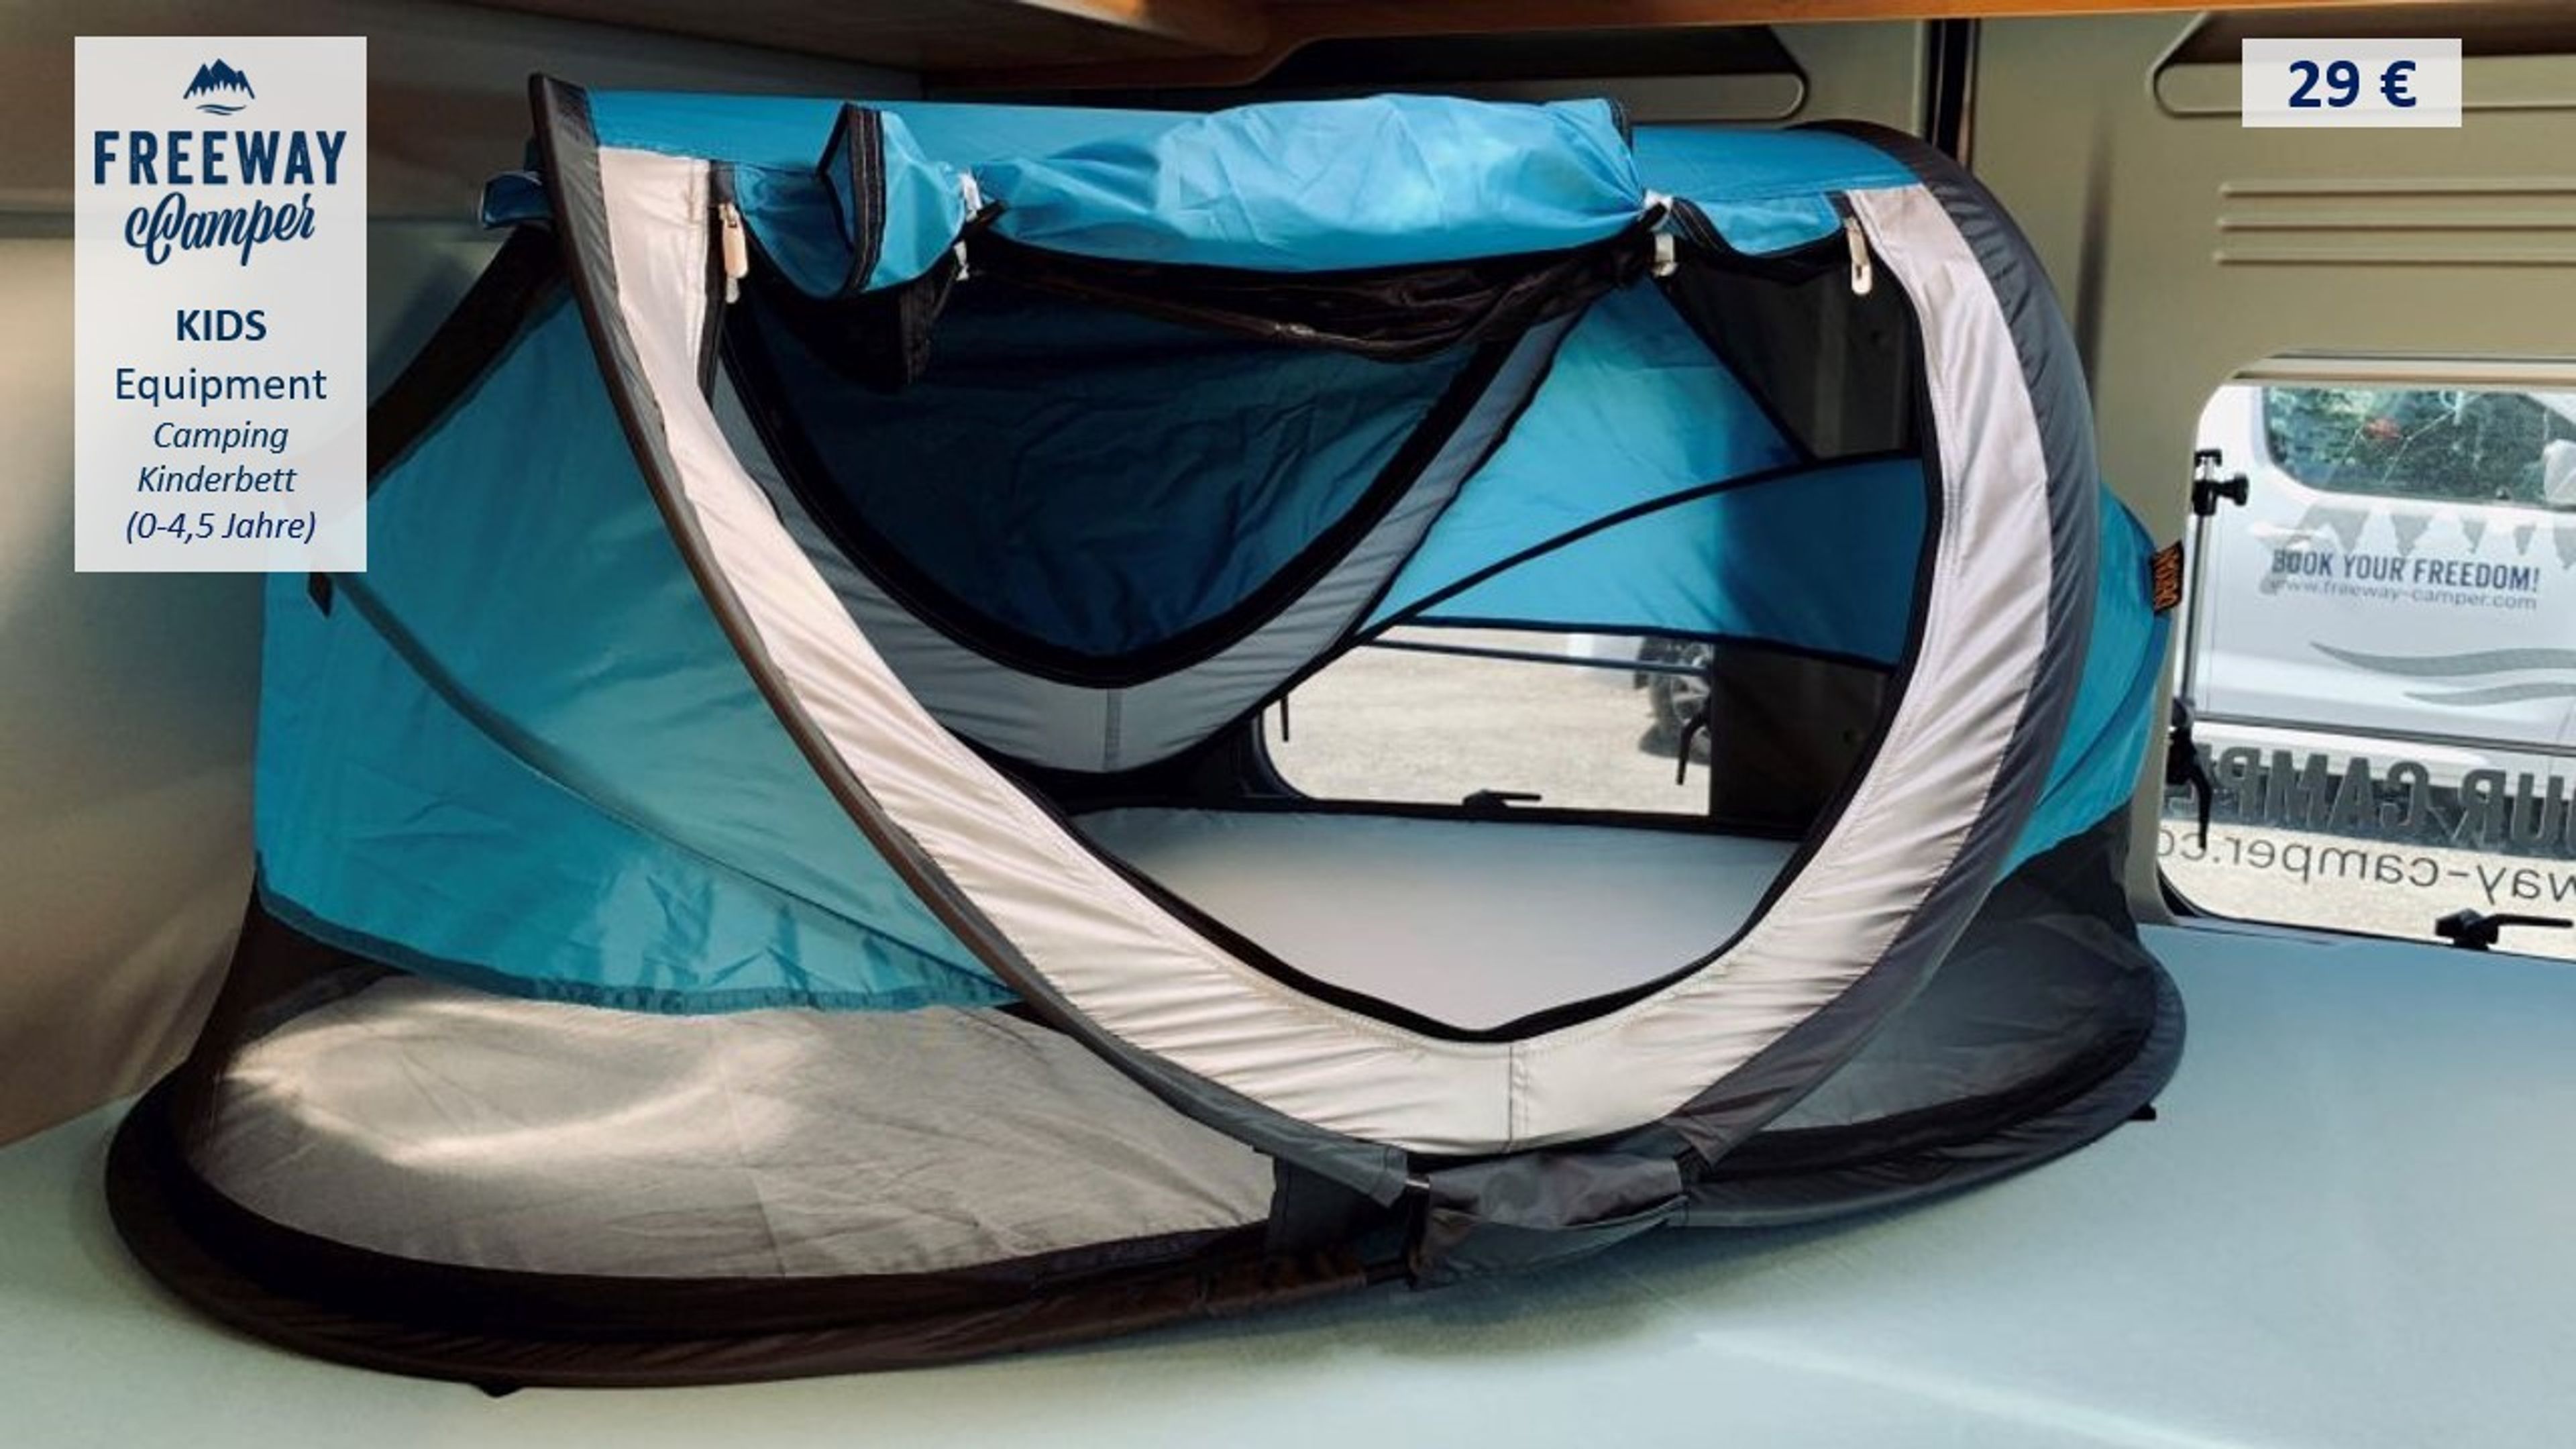 FreewayCamper Kinderbett zum Campen